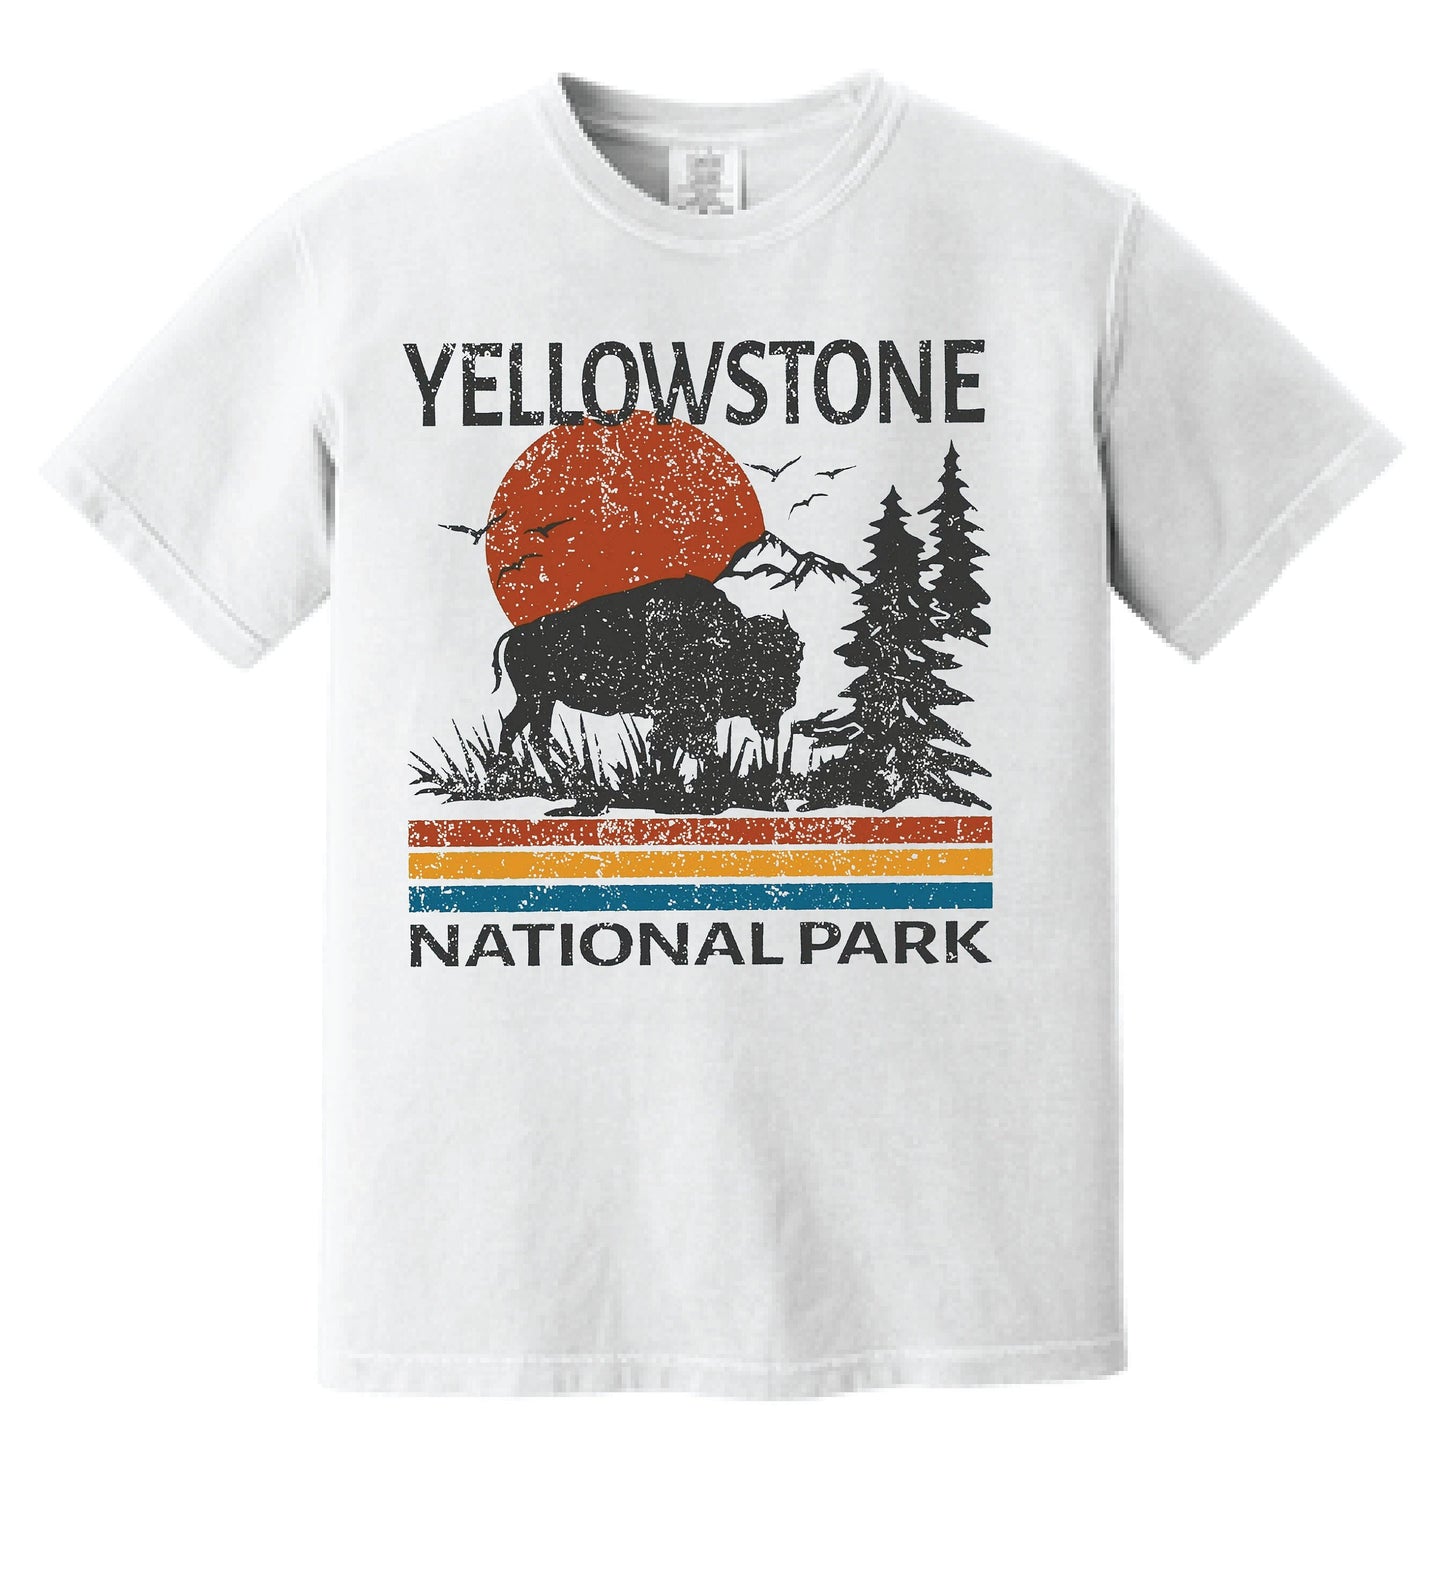 Yellowstone Tee, Yellowstone National Park T-Shirt, The Yellowstone Vintage Inspired tee, Unisex Tee, Comfort Colors T-shirt, Oversized Tee